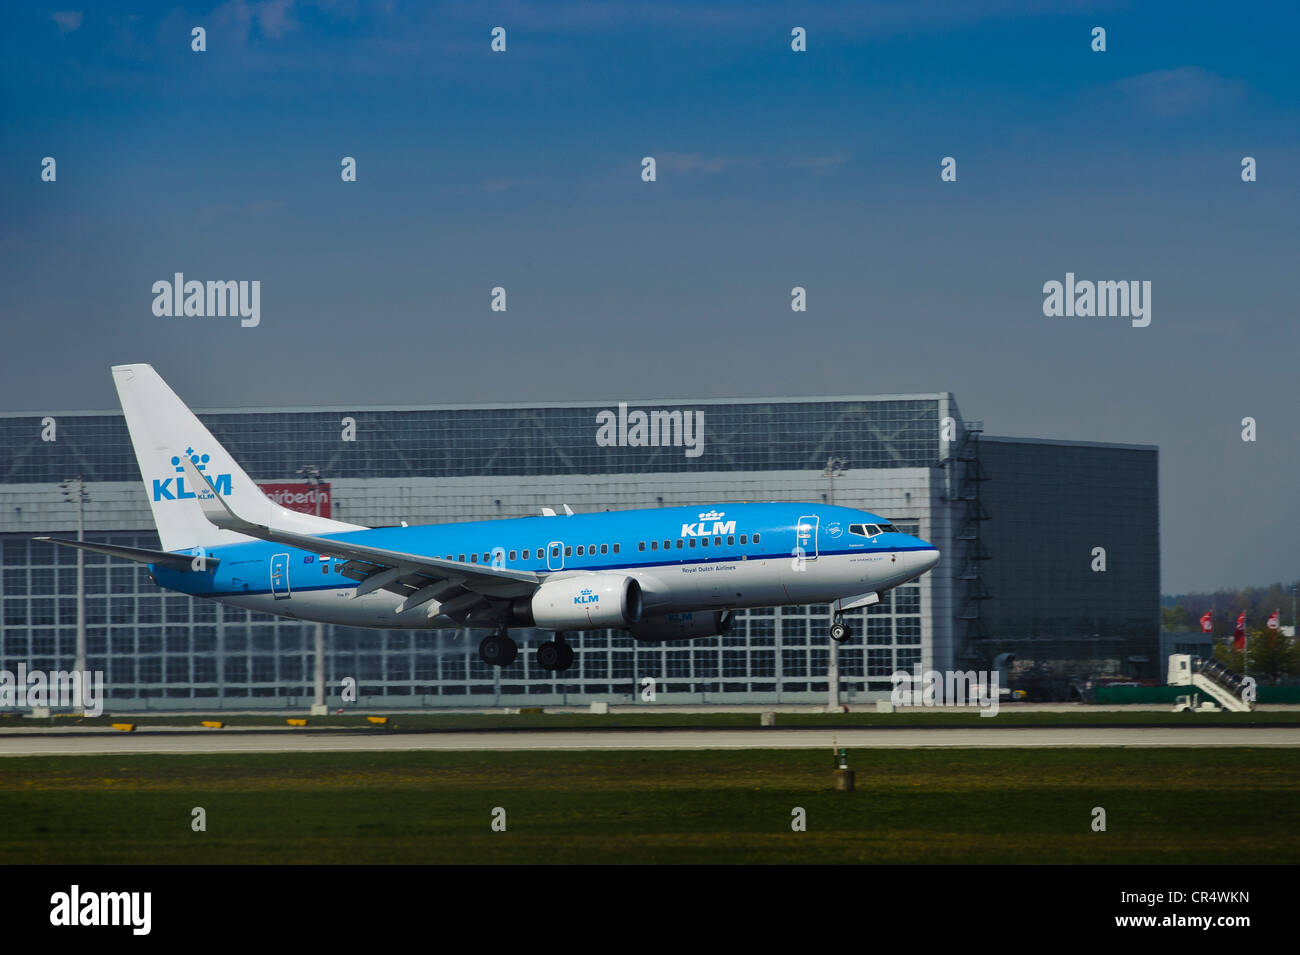 KLM plane landing, Franz-Josef-Strauss Airport, Munich, Bavaria, Germany, Europe Stock Photo